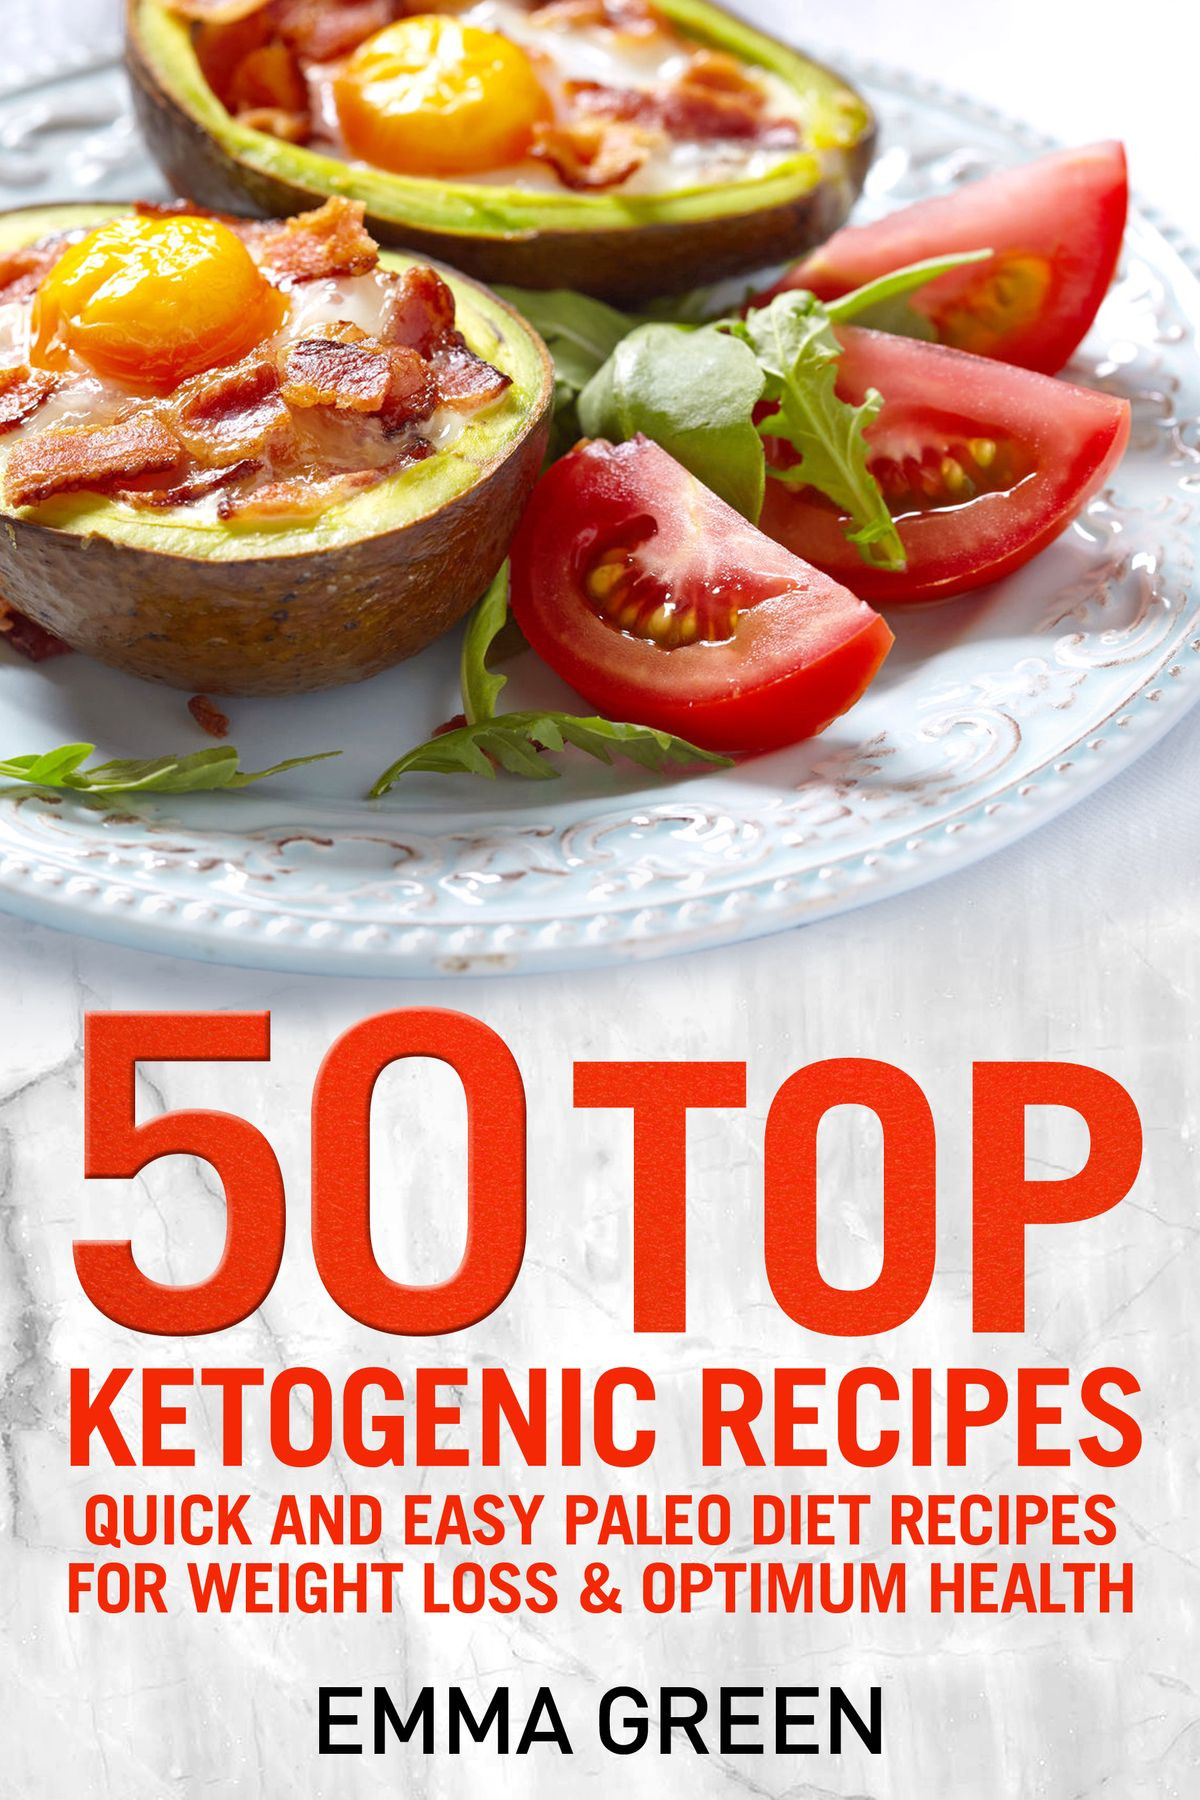 Keto Diet Recipes Videos
 50 Top Ketogenic Recipes Quick and Easy Keto Diet Recipes